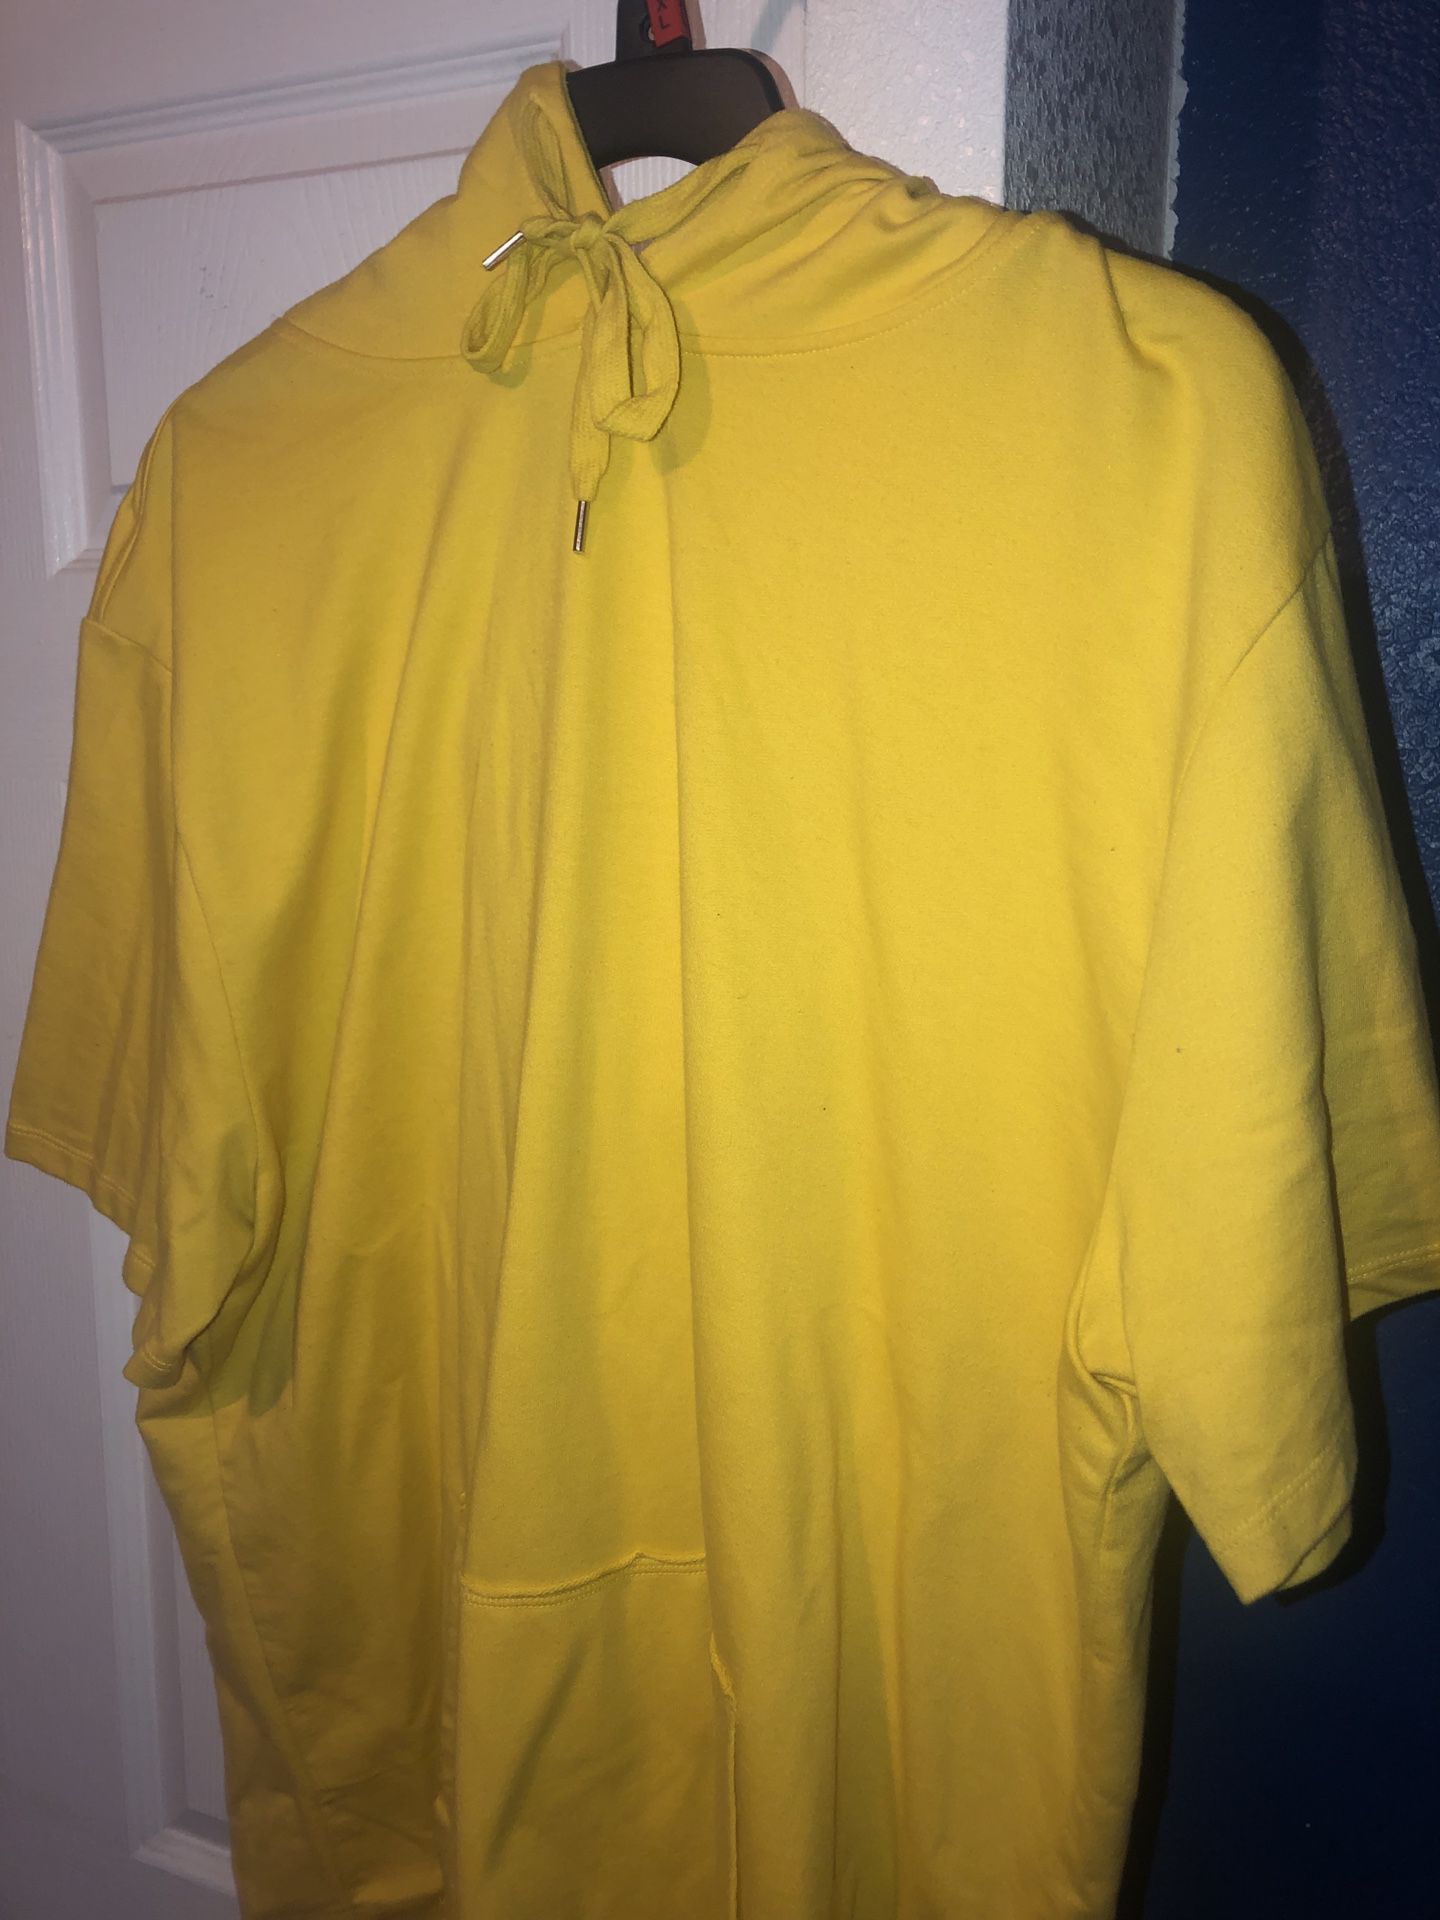 Yellow Forever 21 hoodie shirt